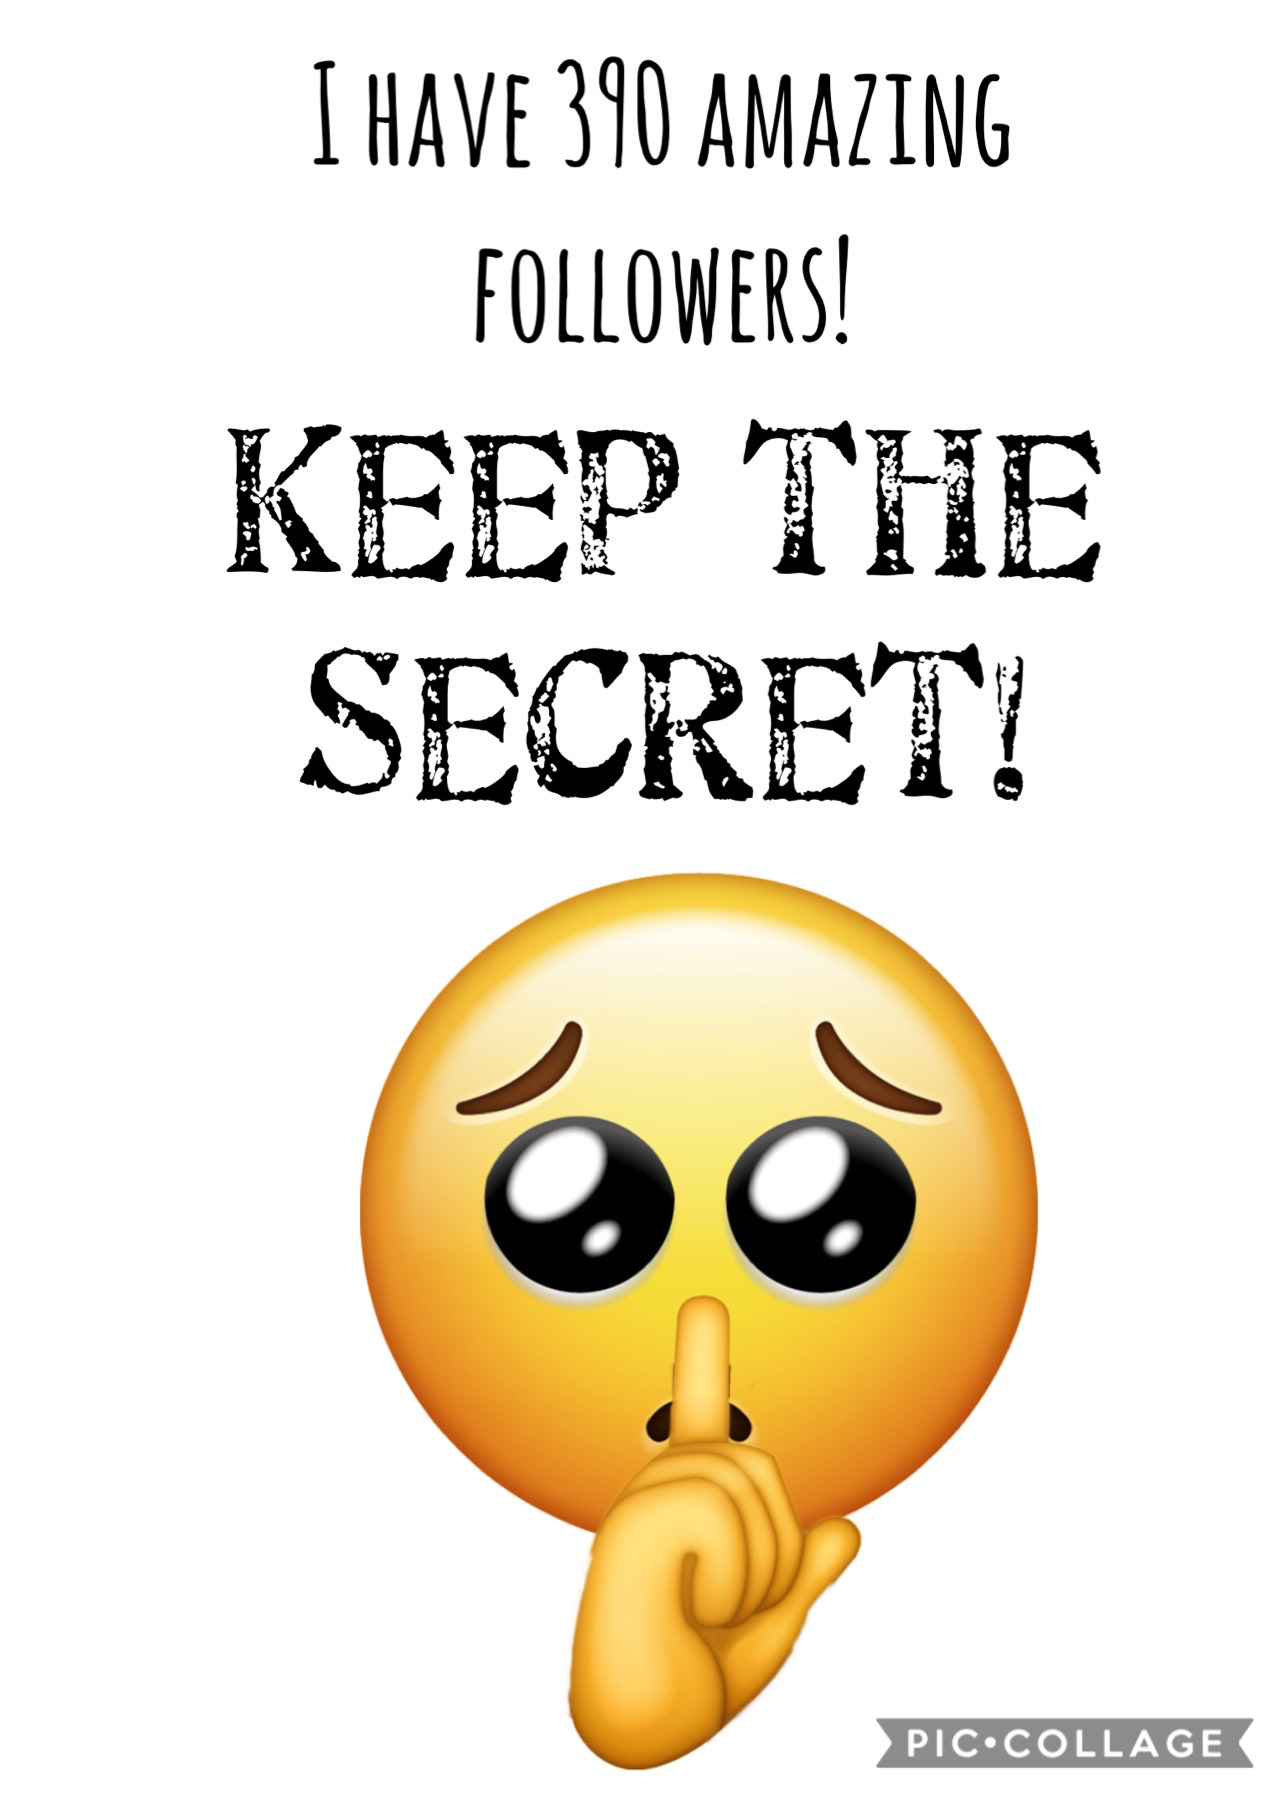 Shh 🤫 Keep the secret!